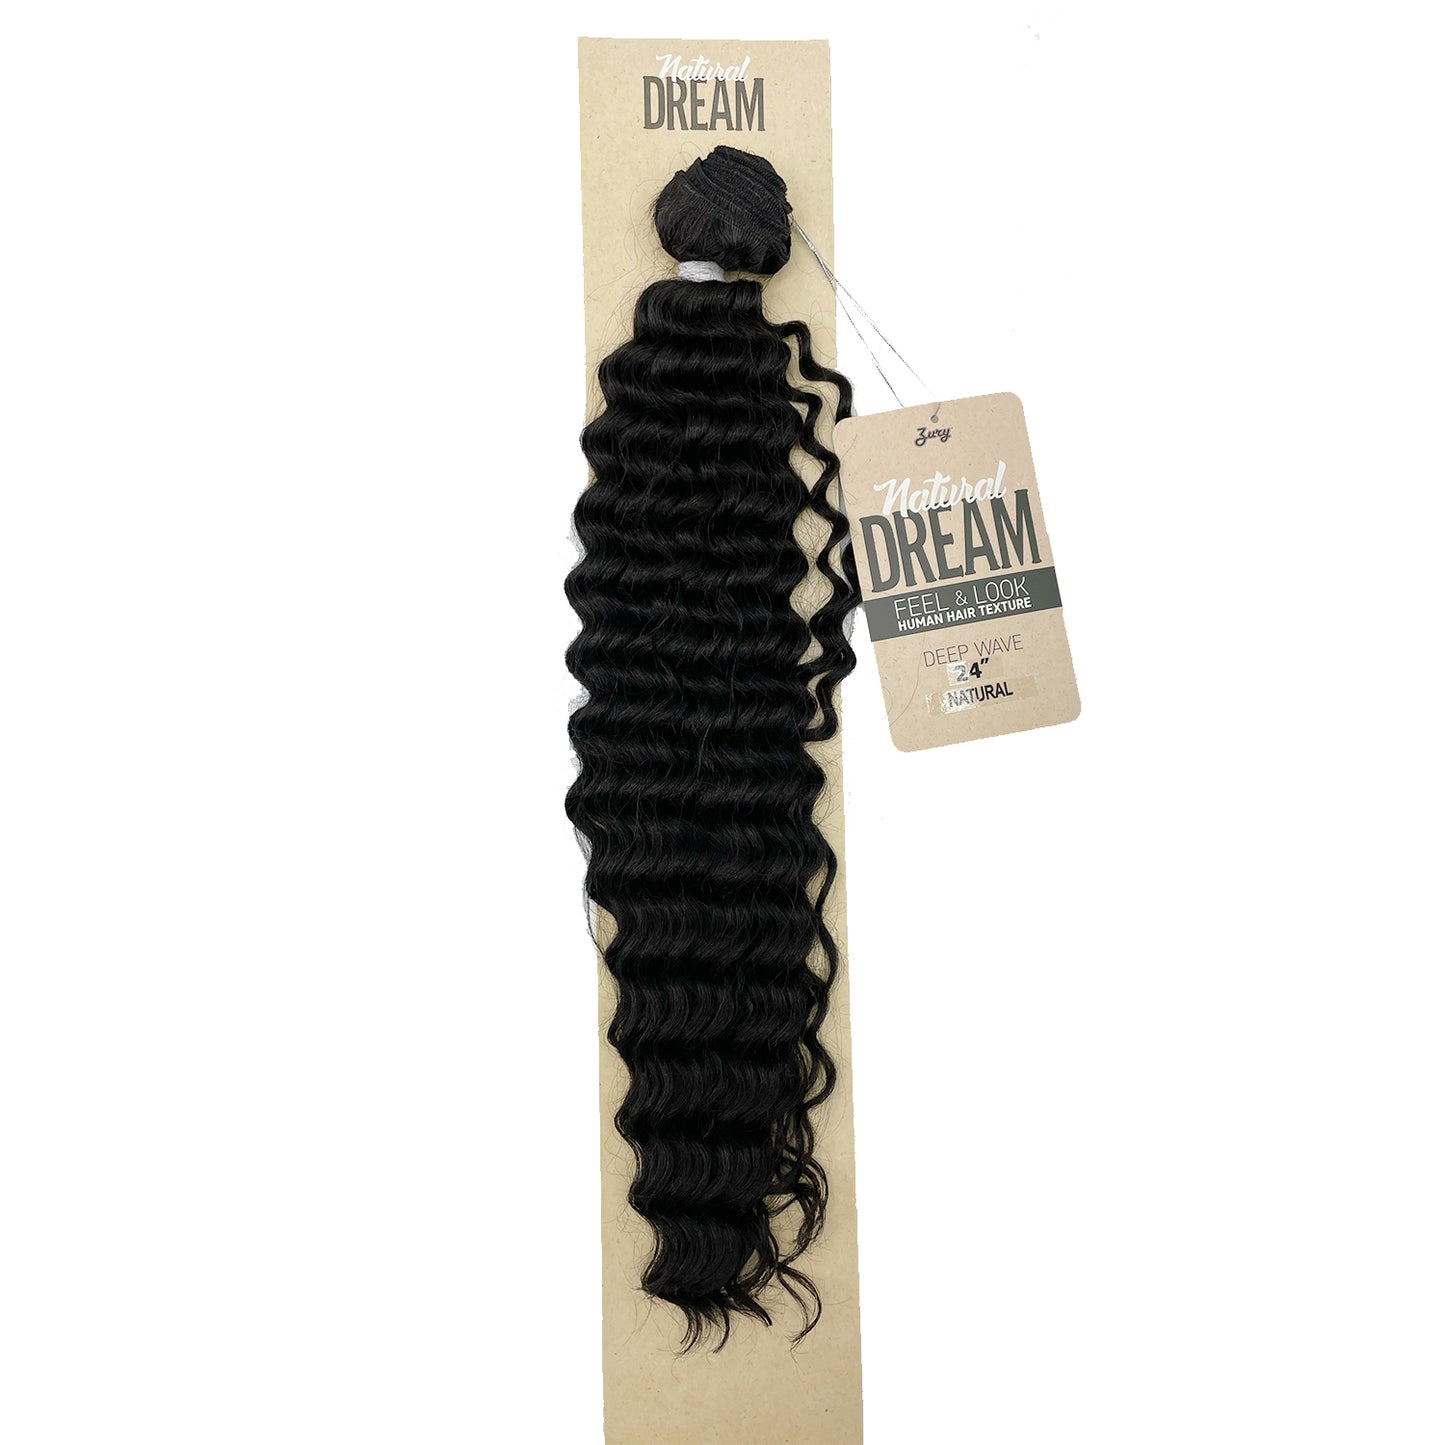 Zury Natural Dream Feel & Look Hair Extension Bundle, Deep Wave 24" natural black